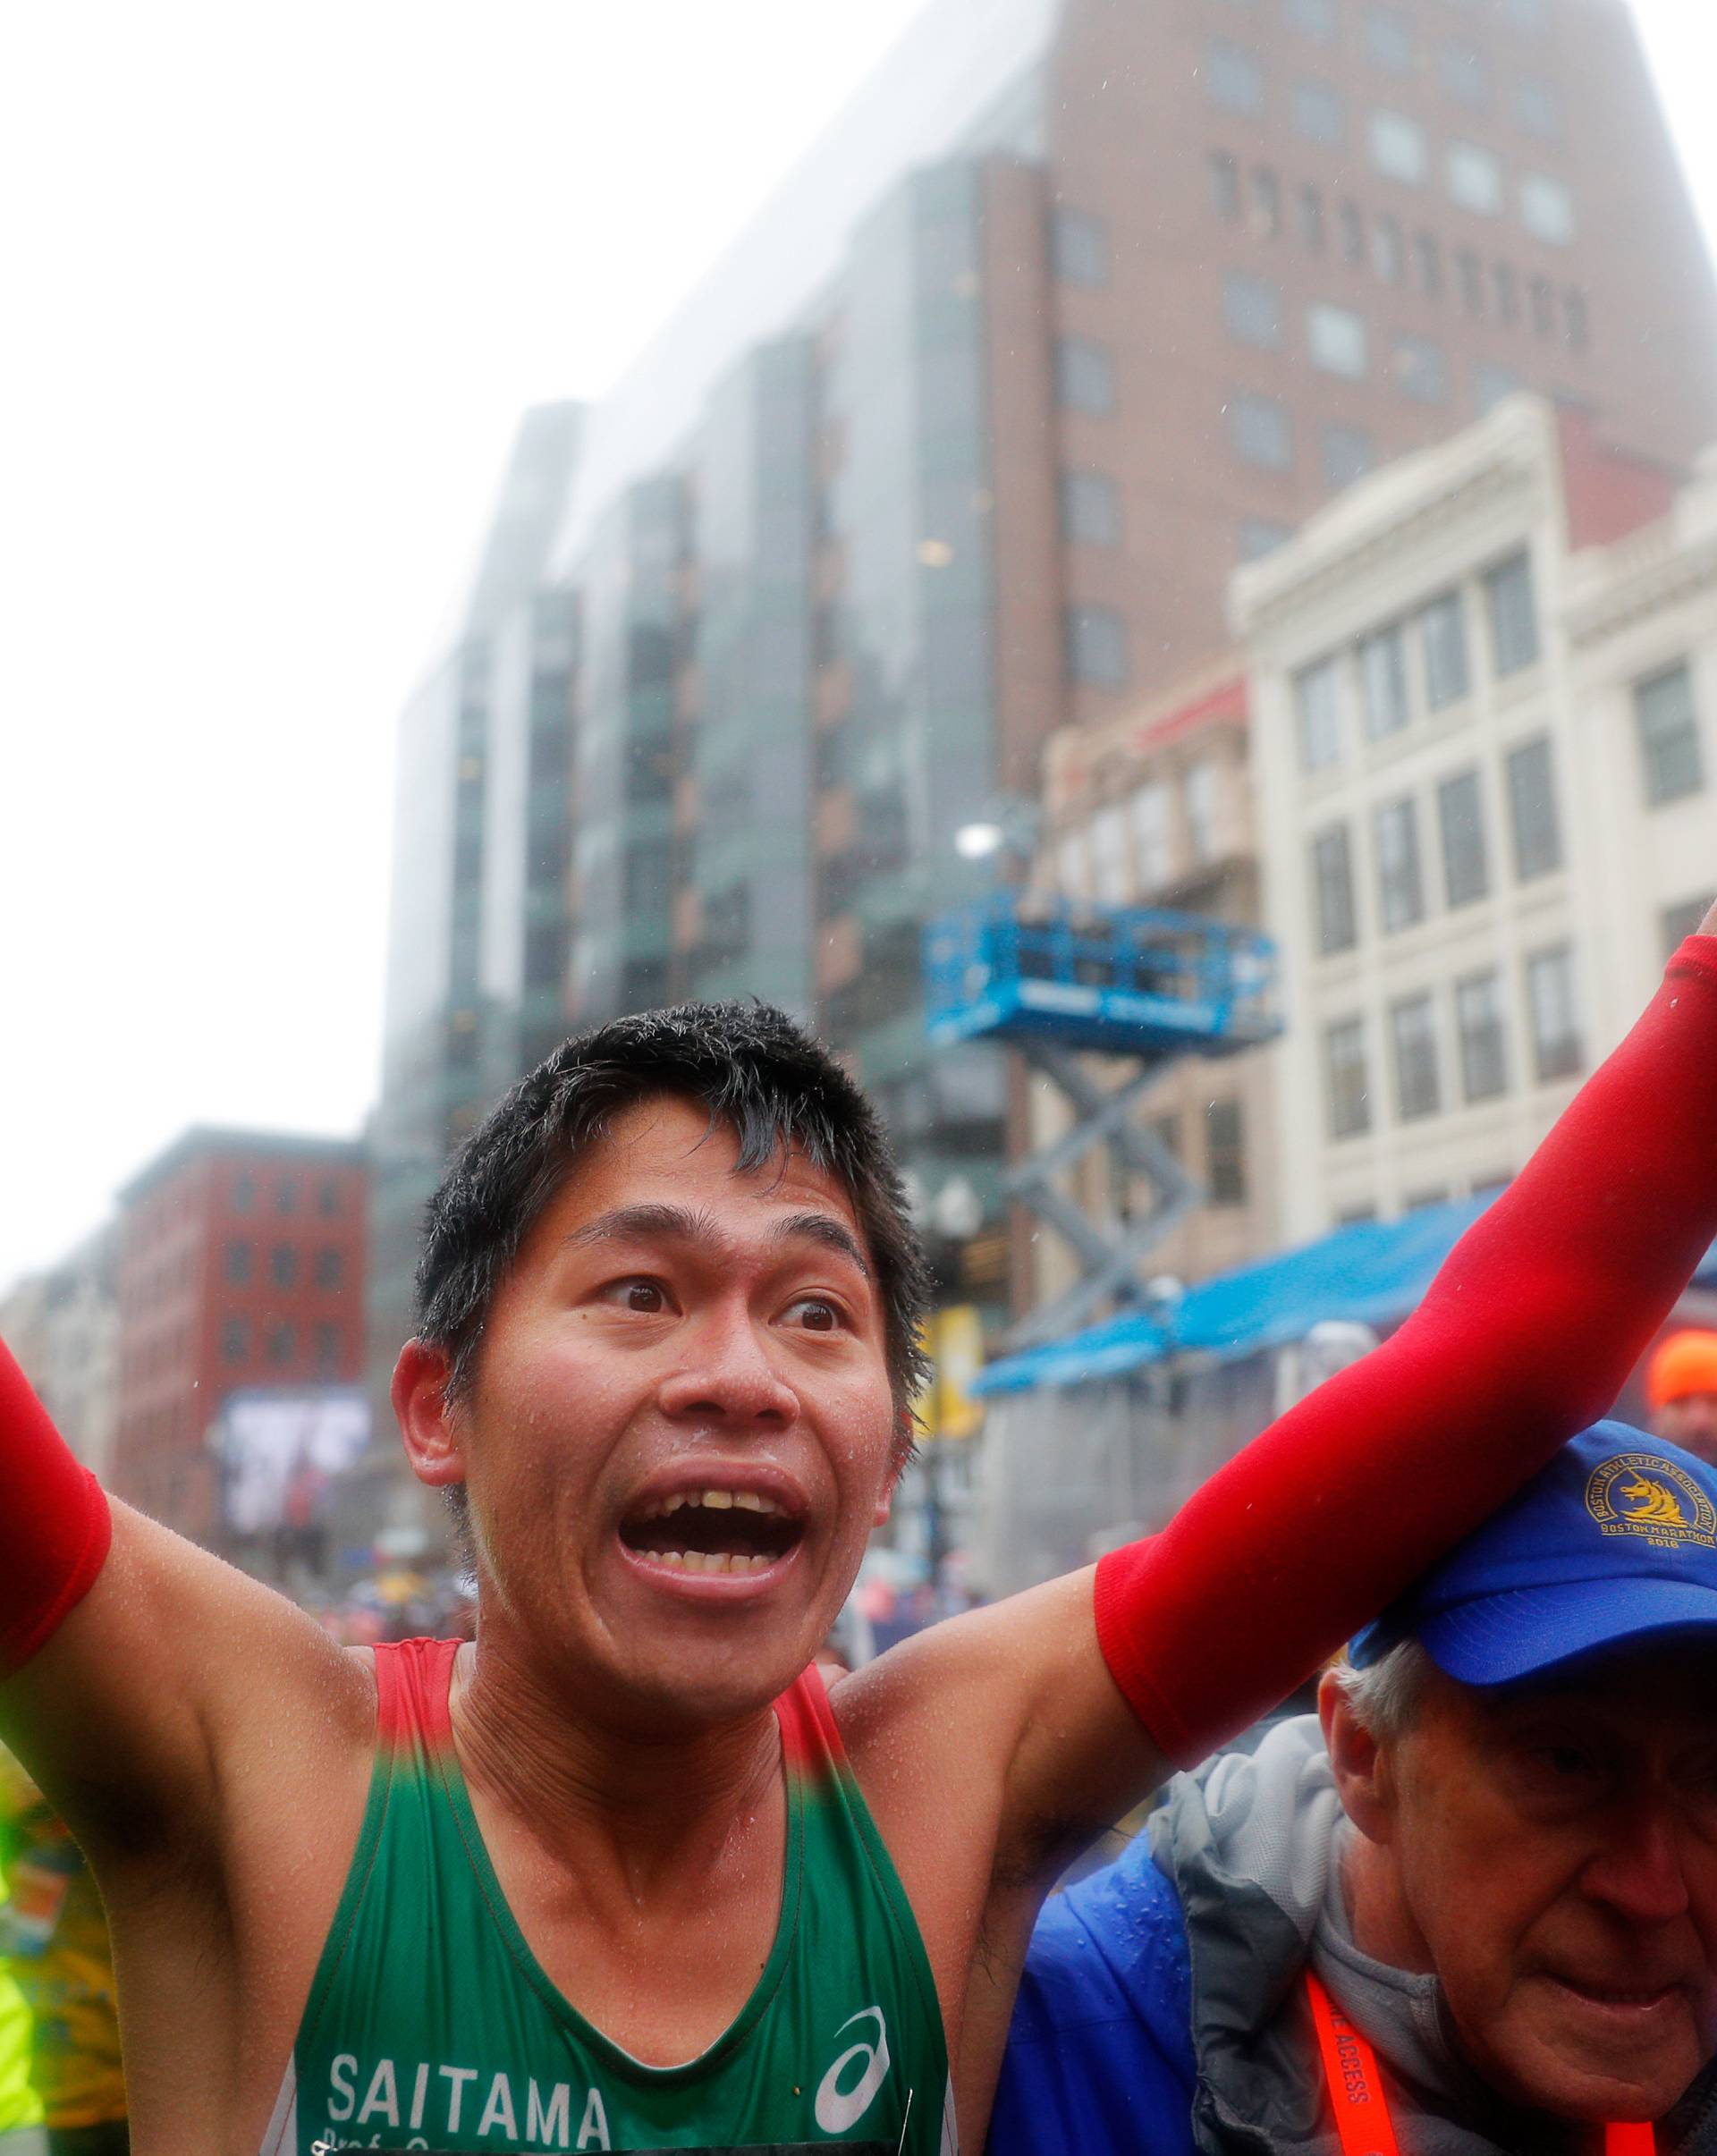 Yuki Kawauchi of Japan celebrates after winning the men's division of the 122nd Boston Marathon in Boston